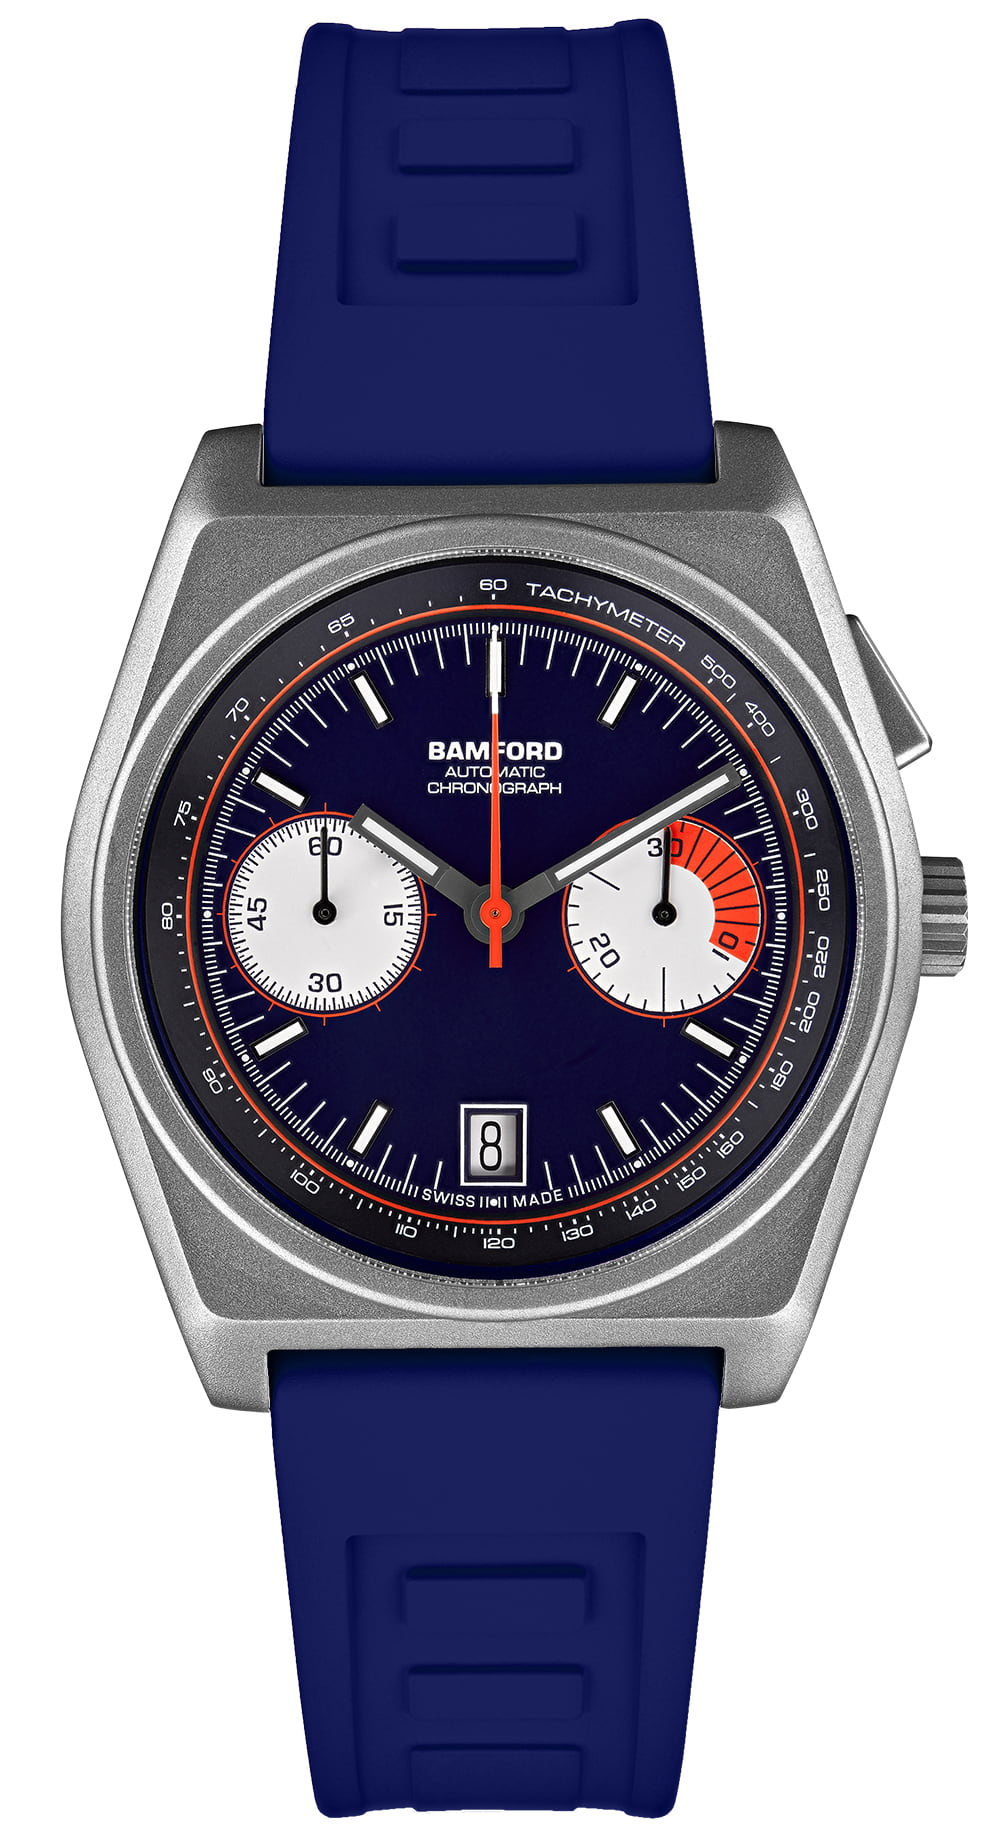 Bamford B347 Titanium Watch